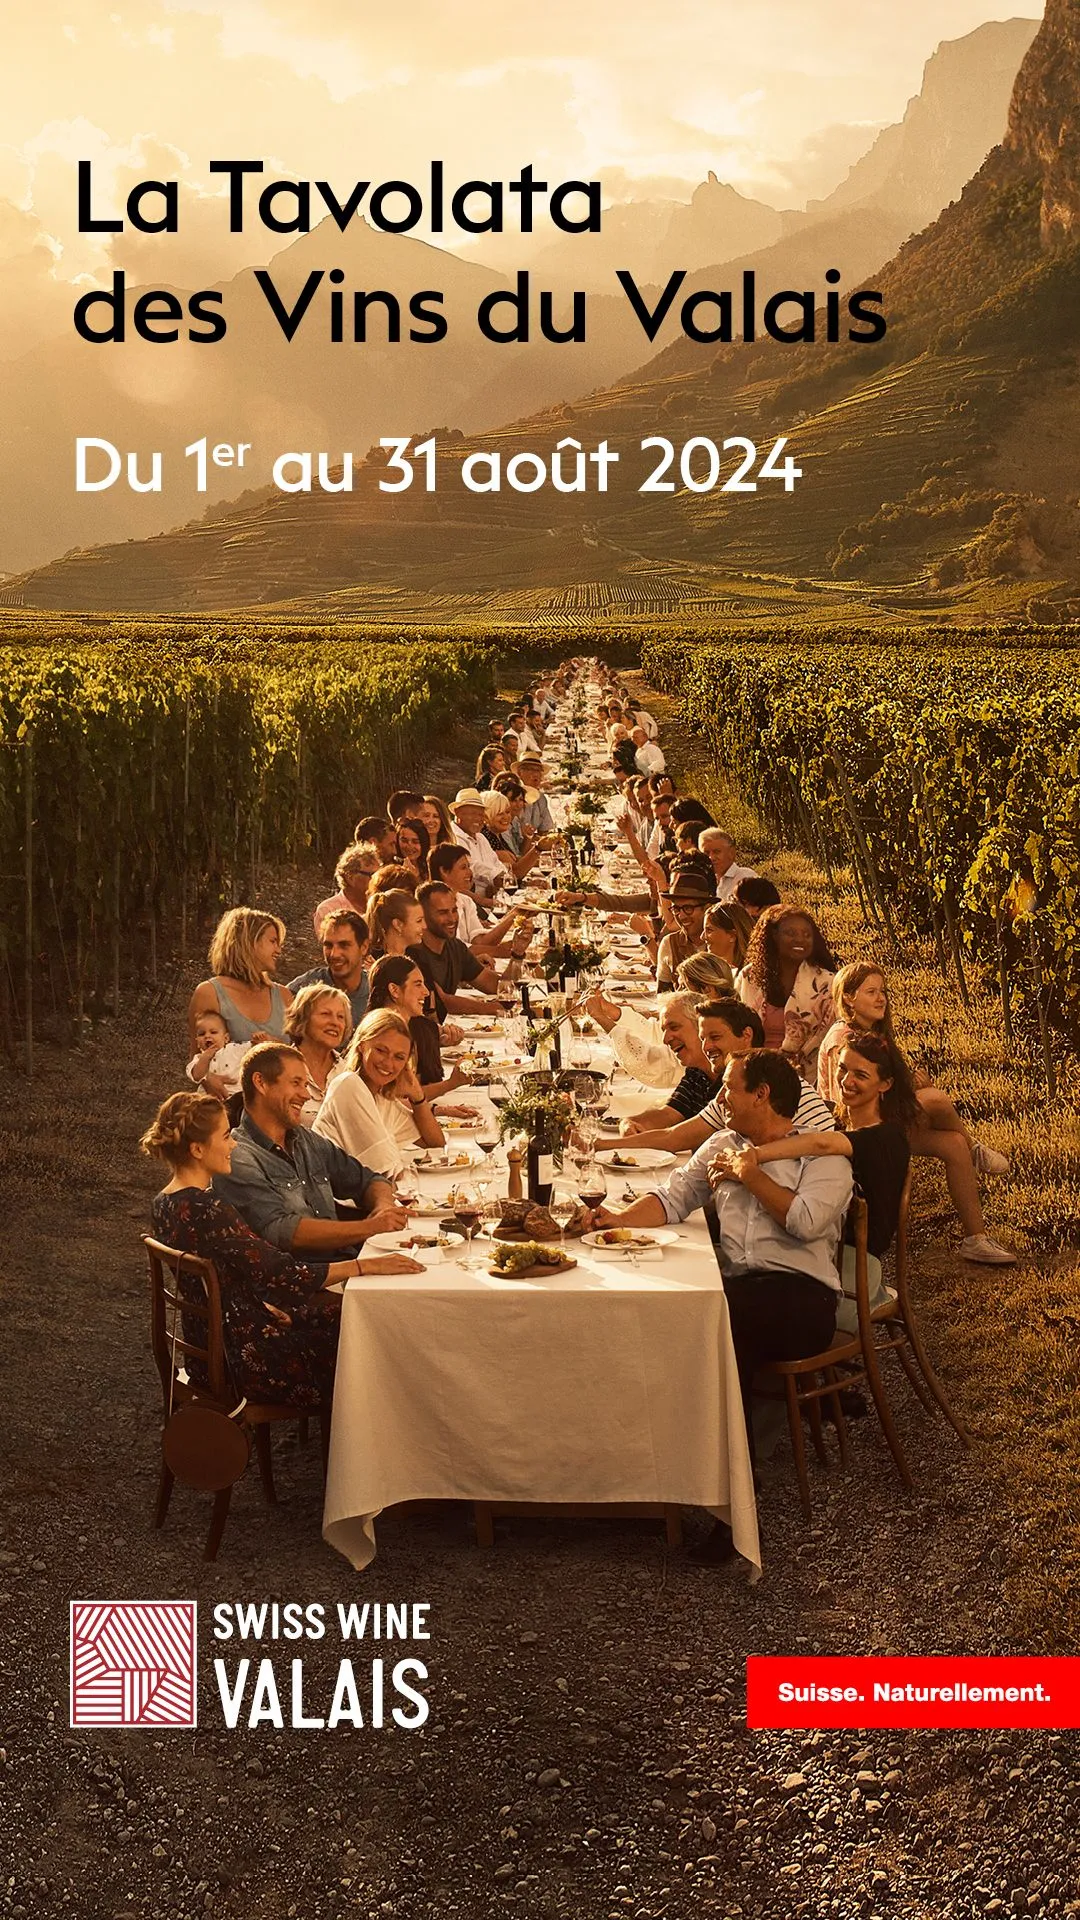 1080x1920_TAVOLATA_IG-STORY_FR - Swiss Wine Valais.jpg